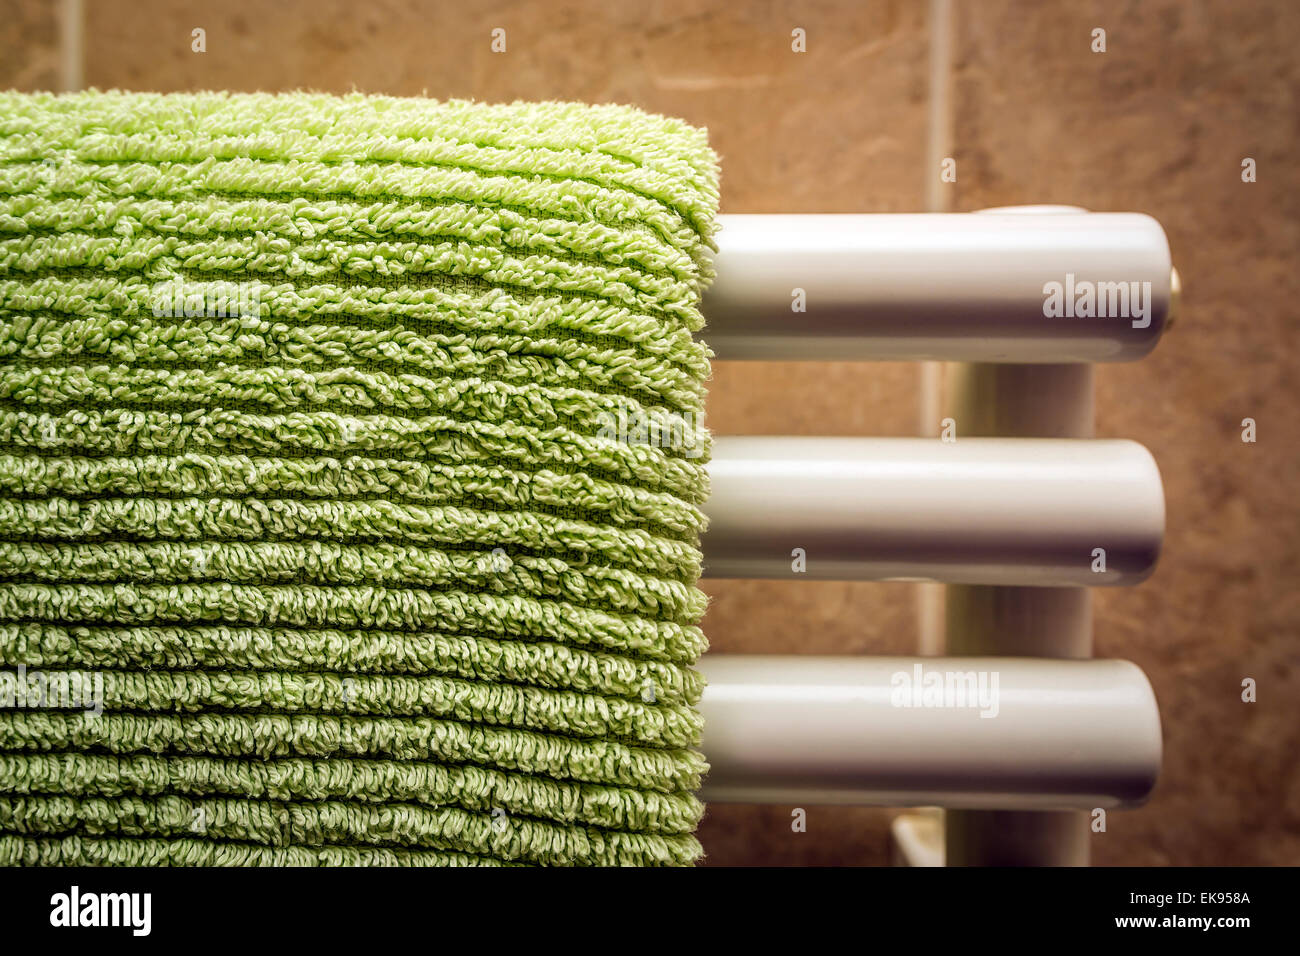 Green towel on radiator Stock Photo